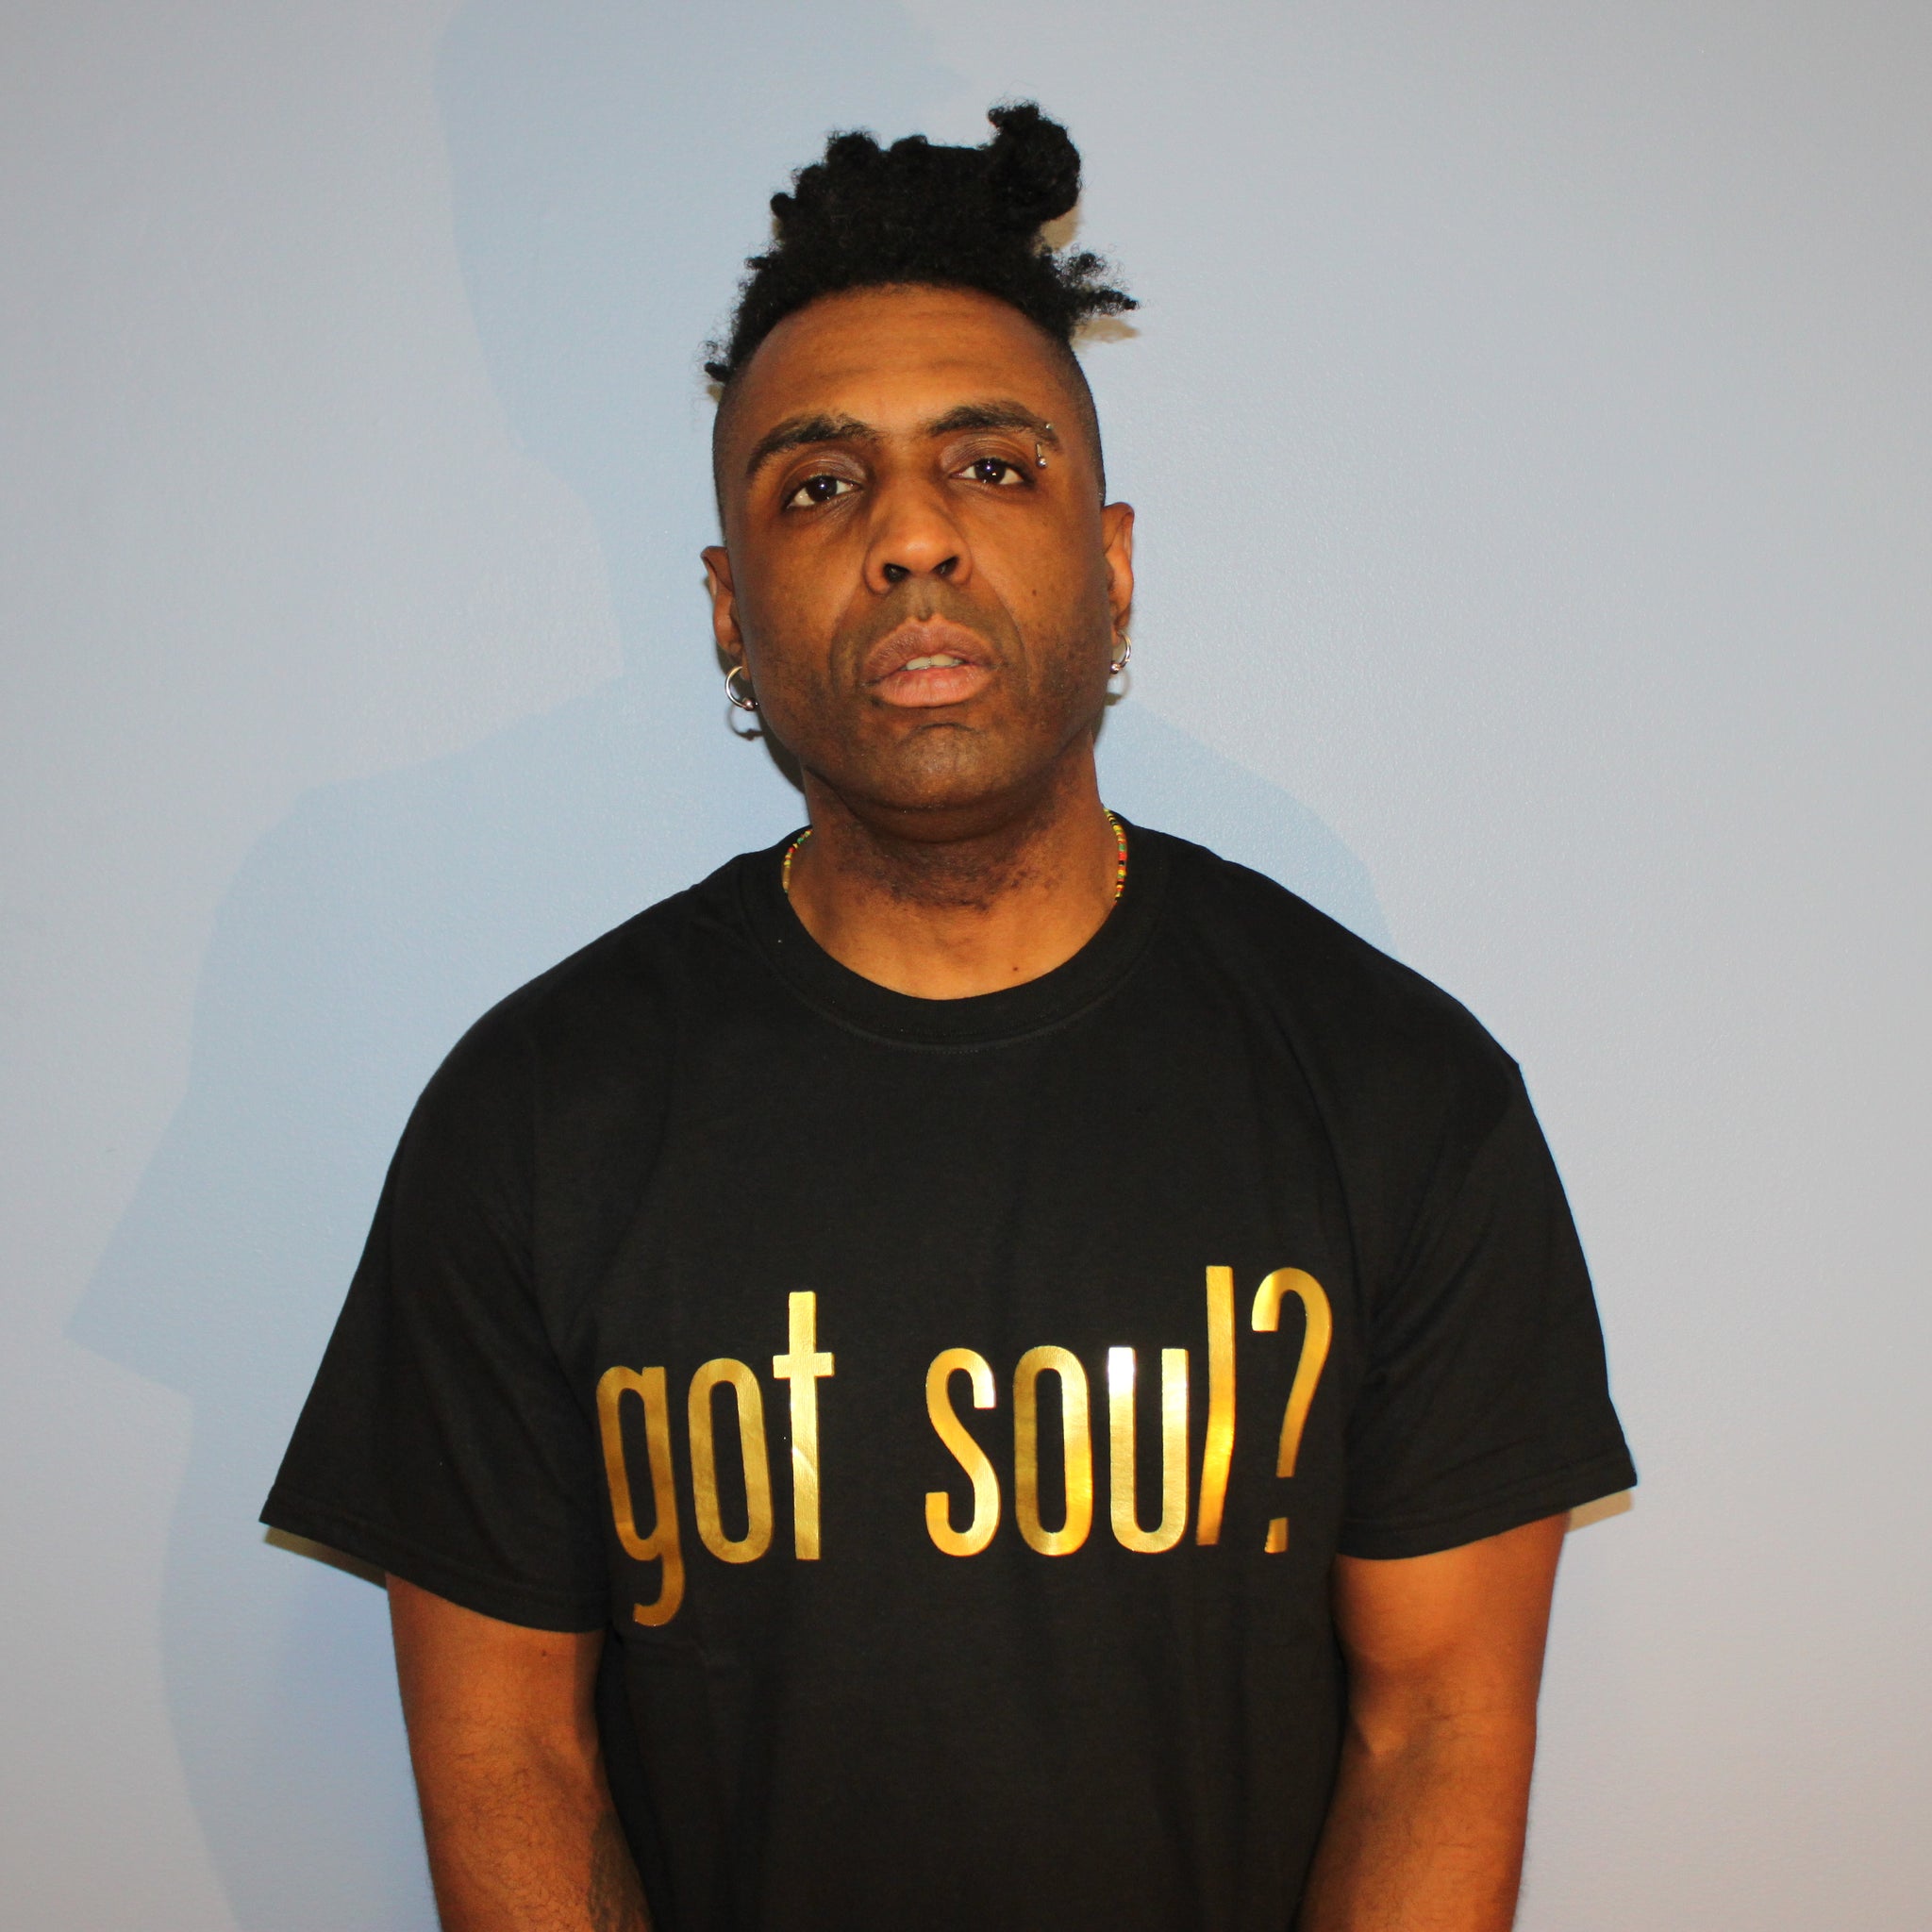 Aerosoul Got Soul Black Teeshirt ( Gold )